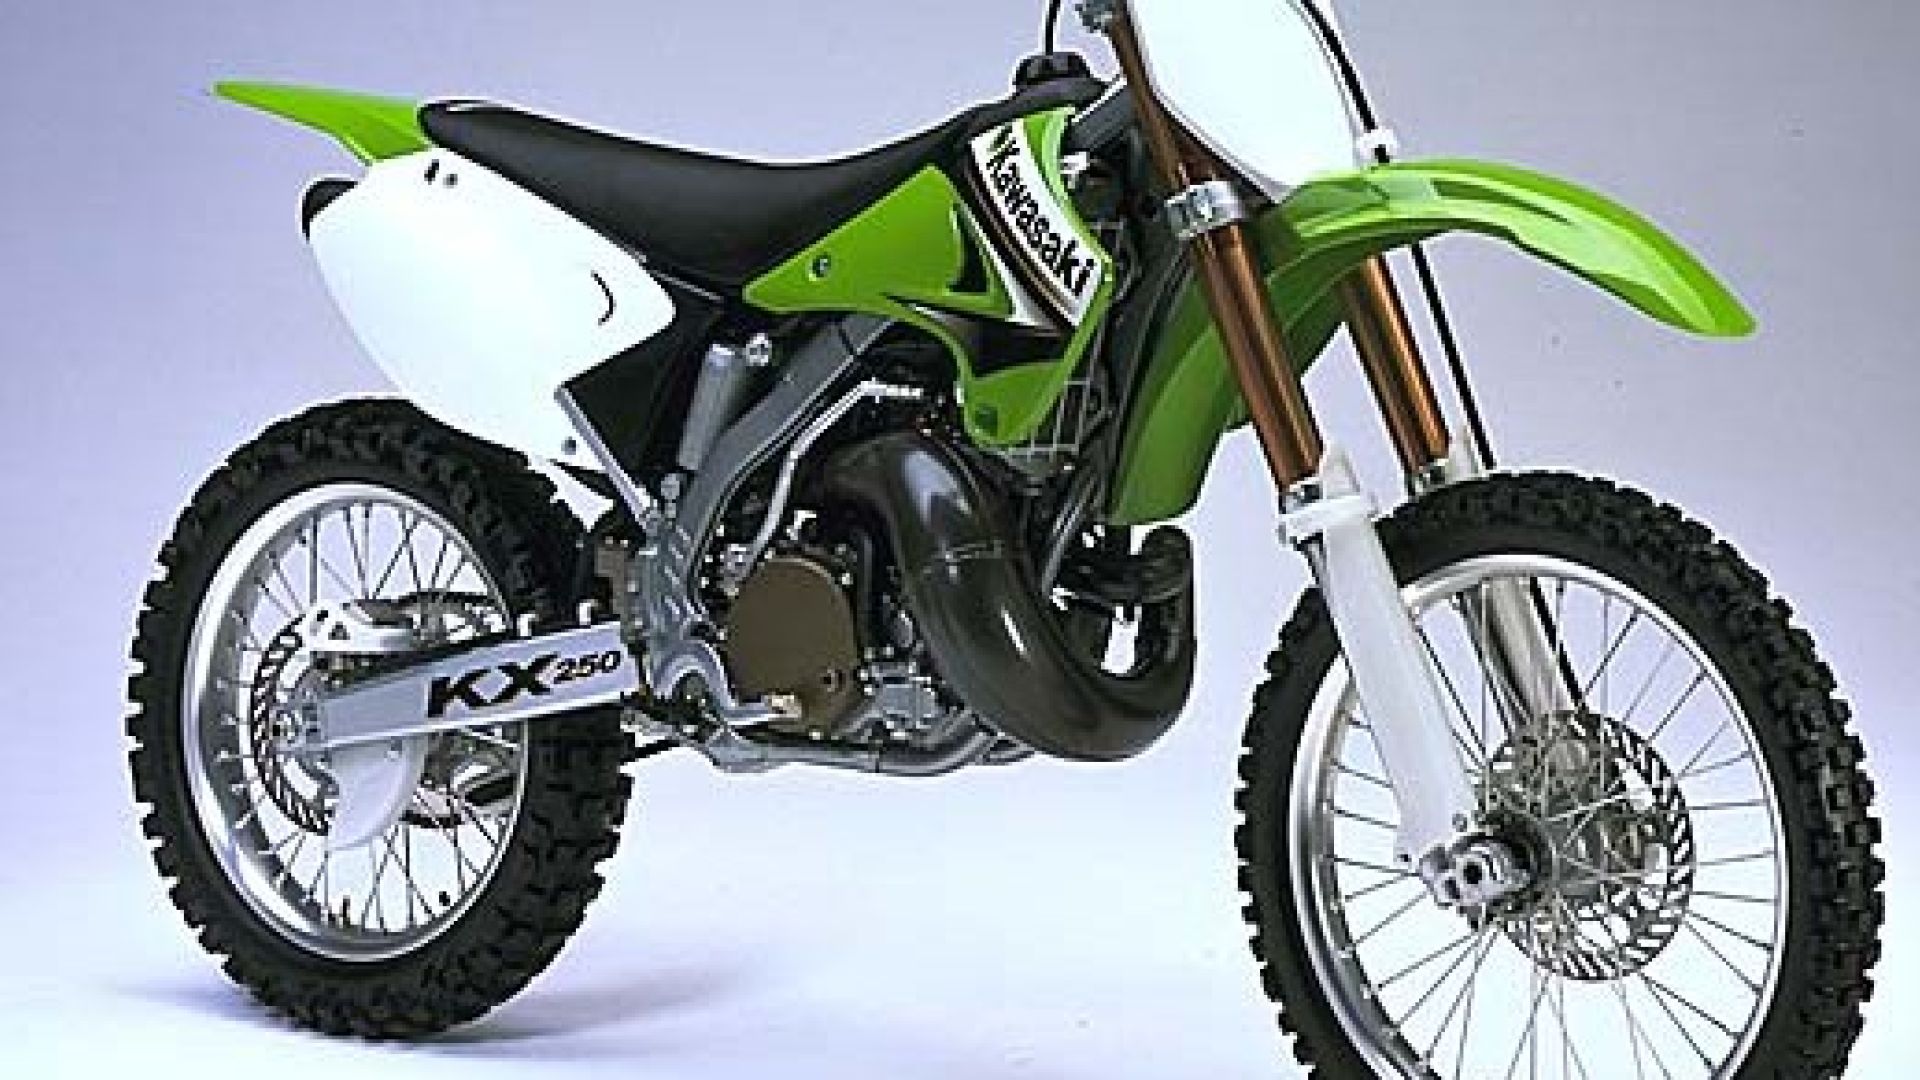 Moto Kawasaki KX 125 - 2002 - R$ 12000.0